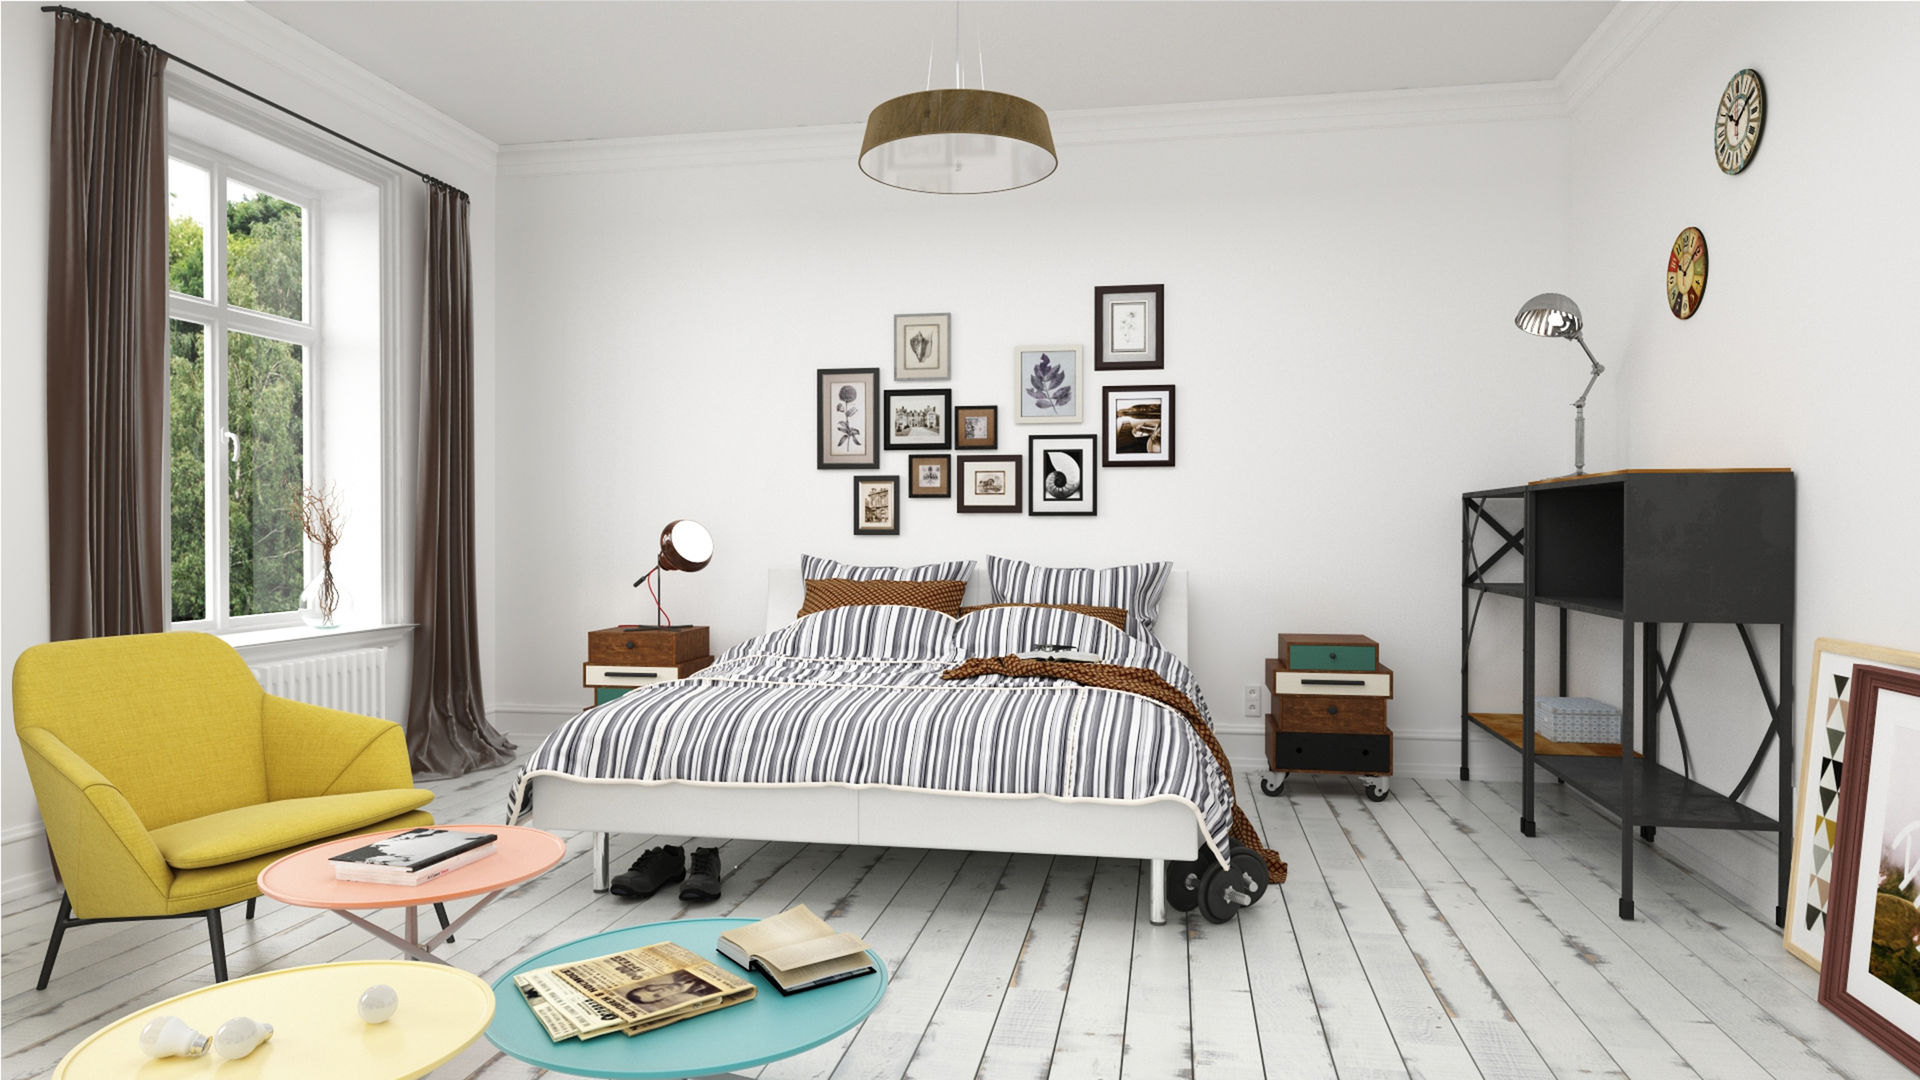 Bedroom in Stockholm - 2015 , InOutSide Architecture and Design InOutSide Architecture and Design Bedroom